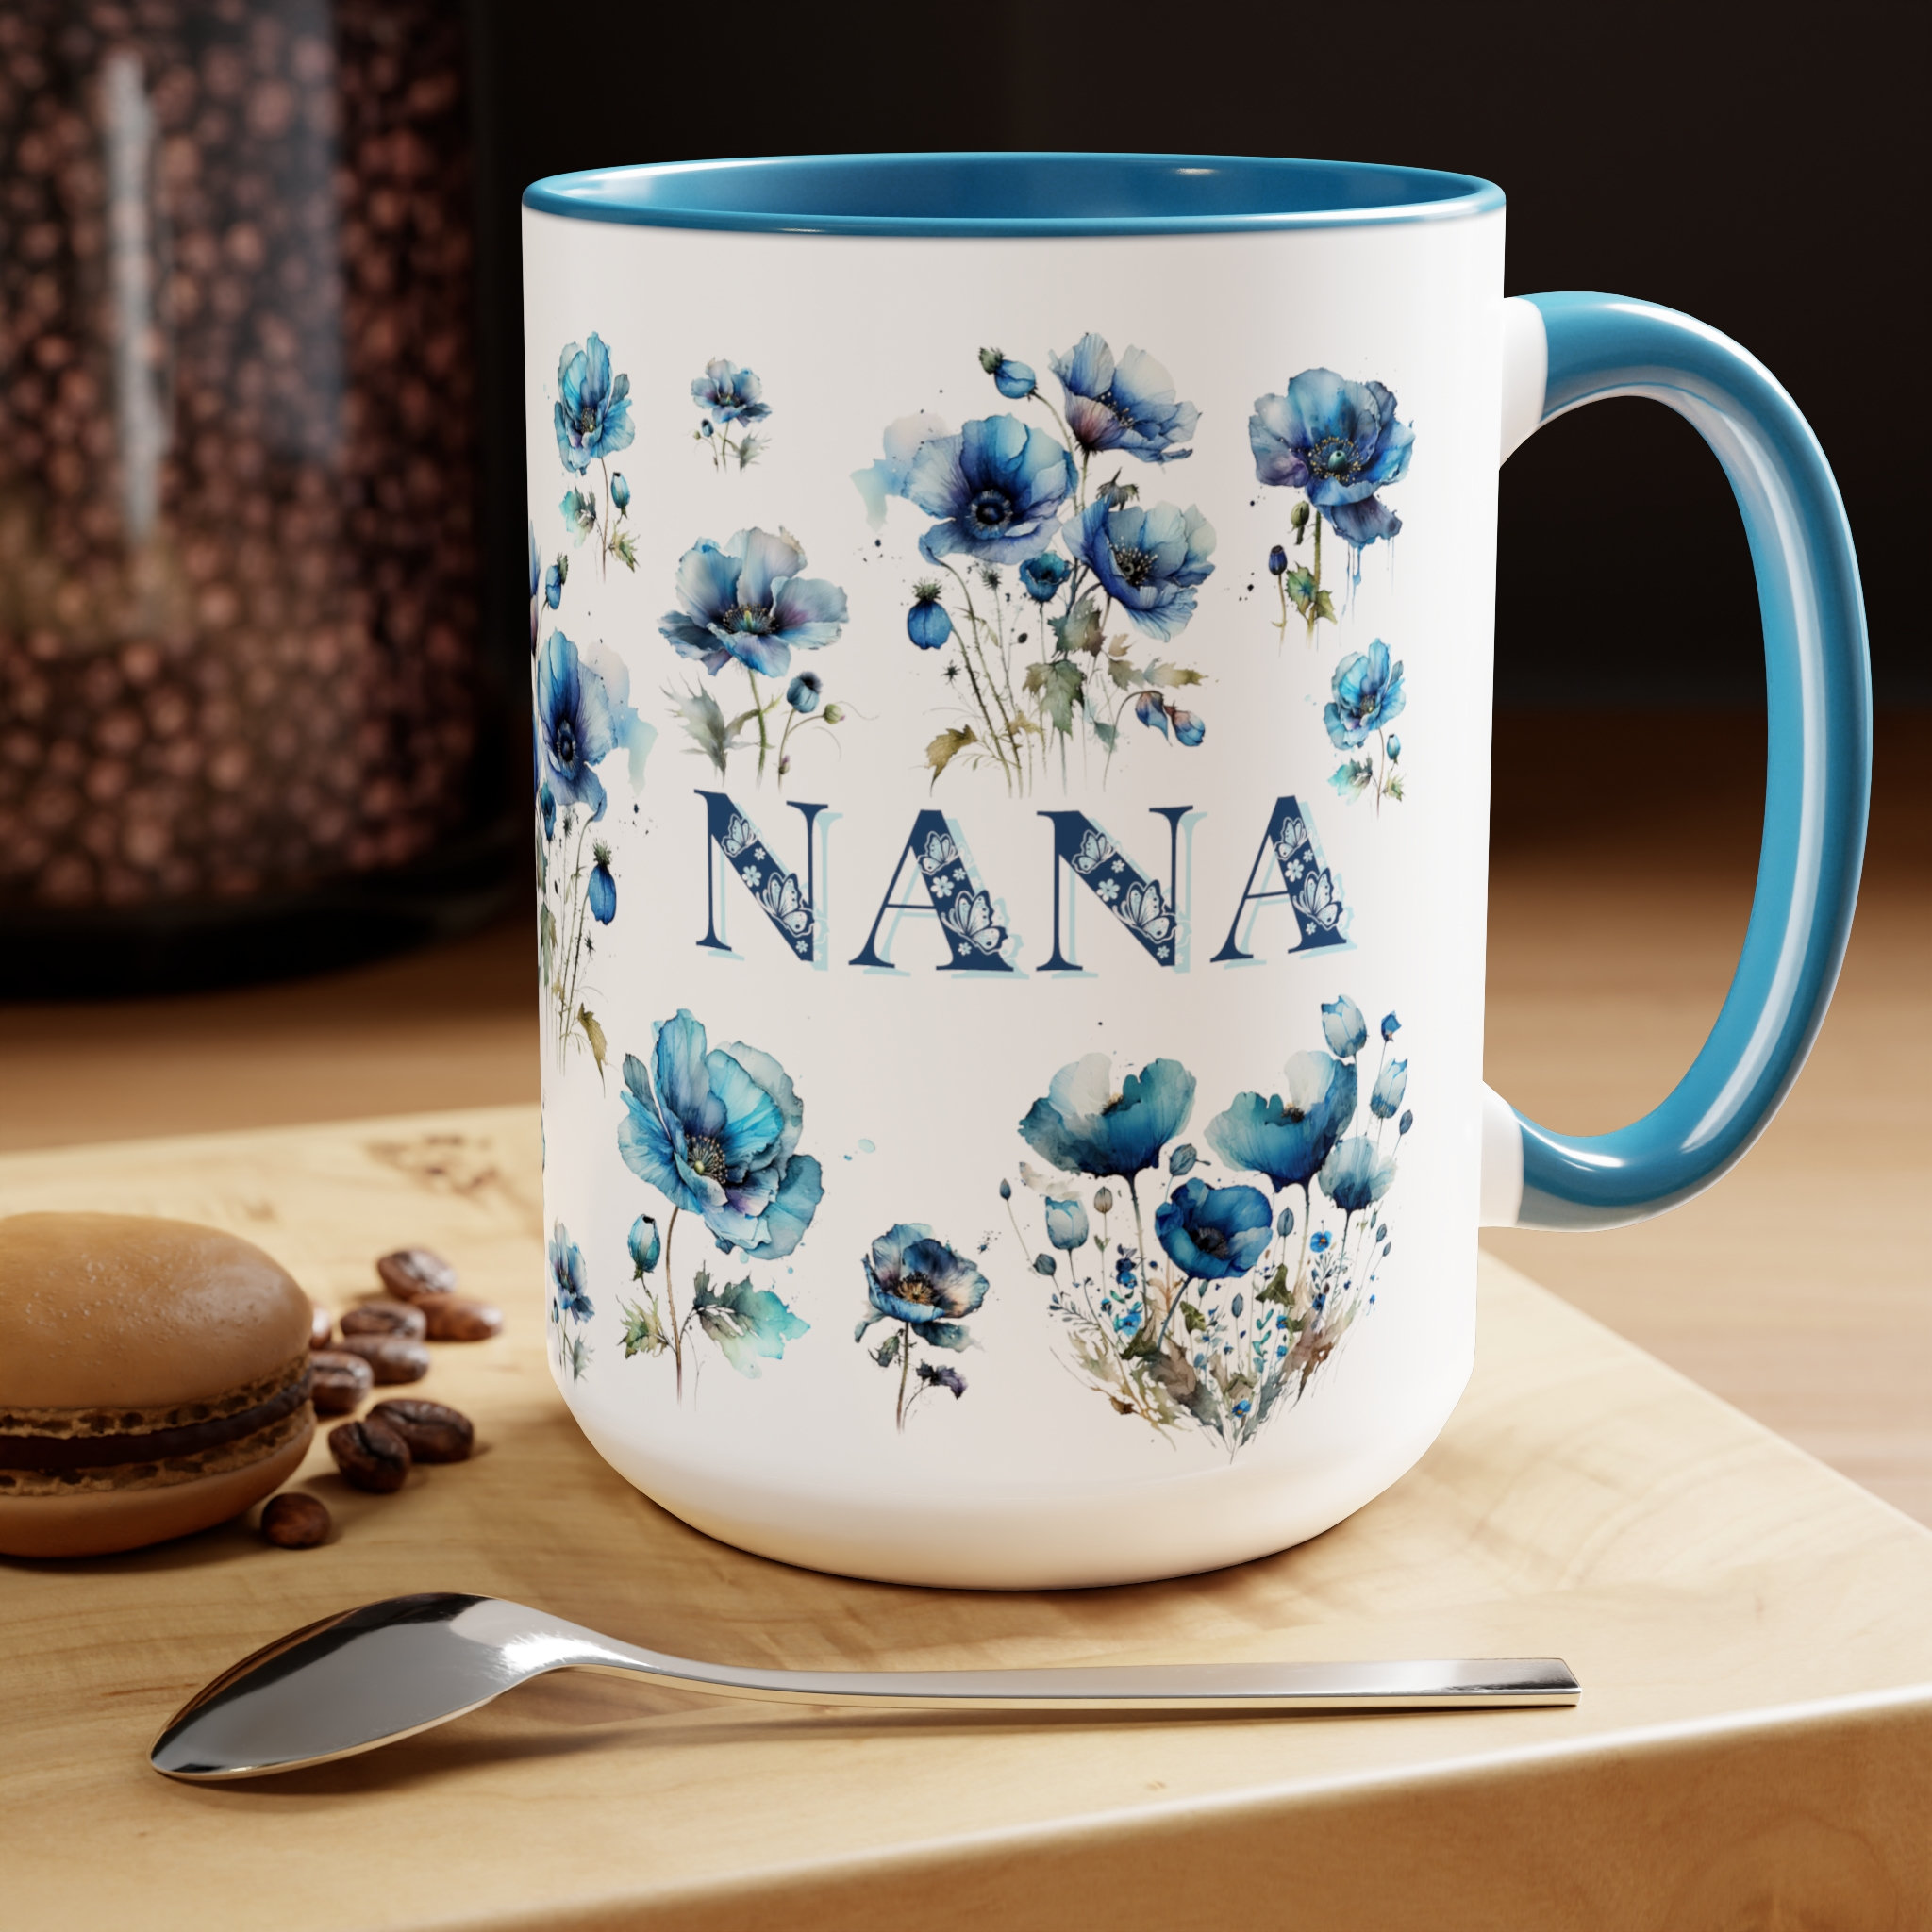  UNNESALT Nana Gifts - Birthday Gifts for Nana from